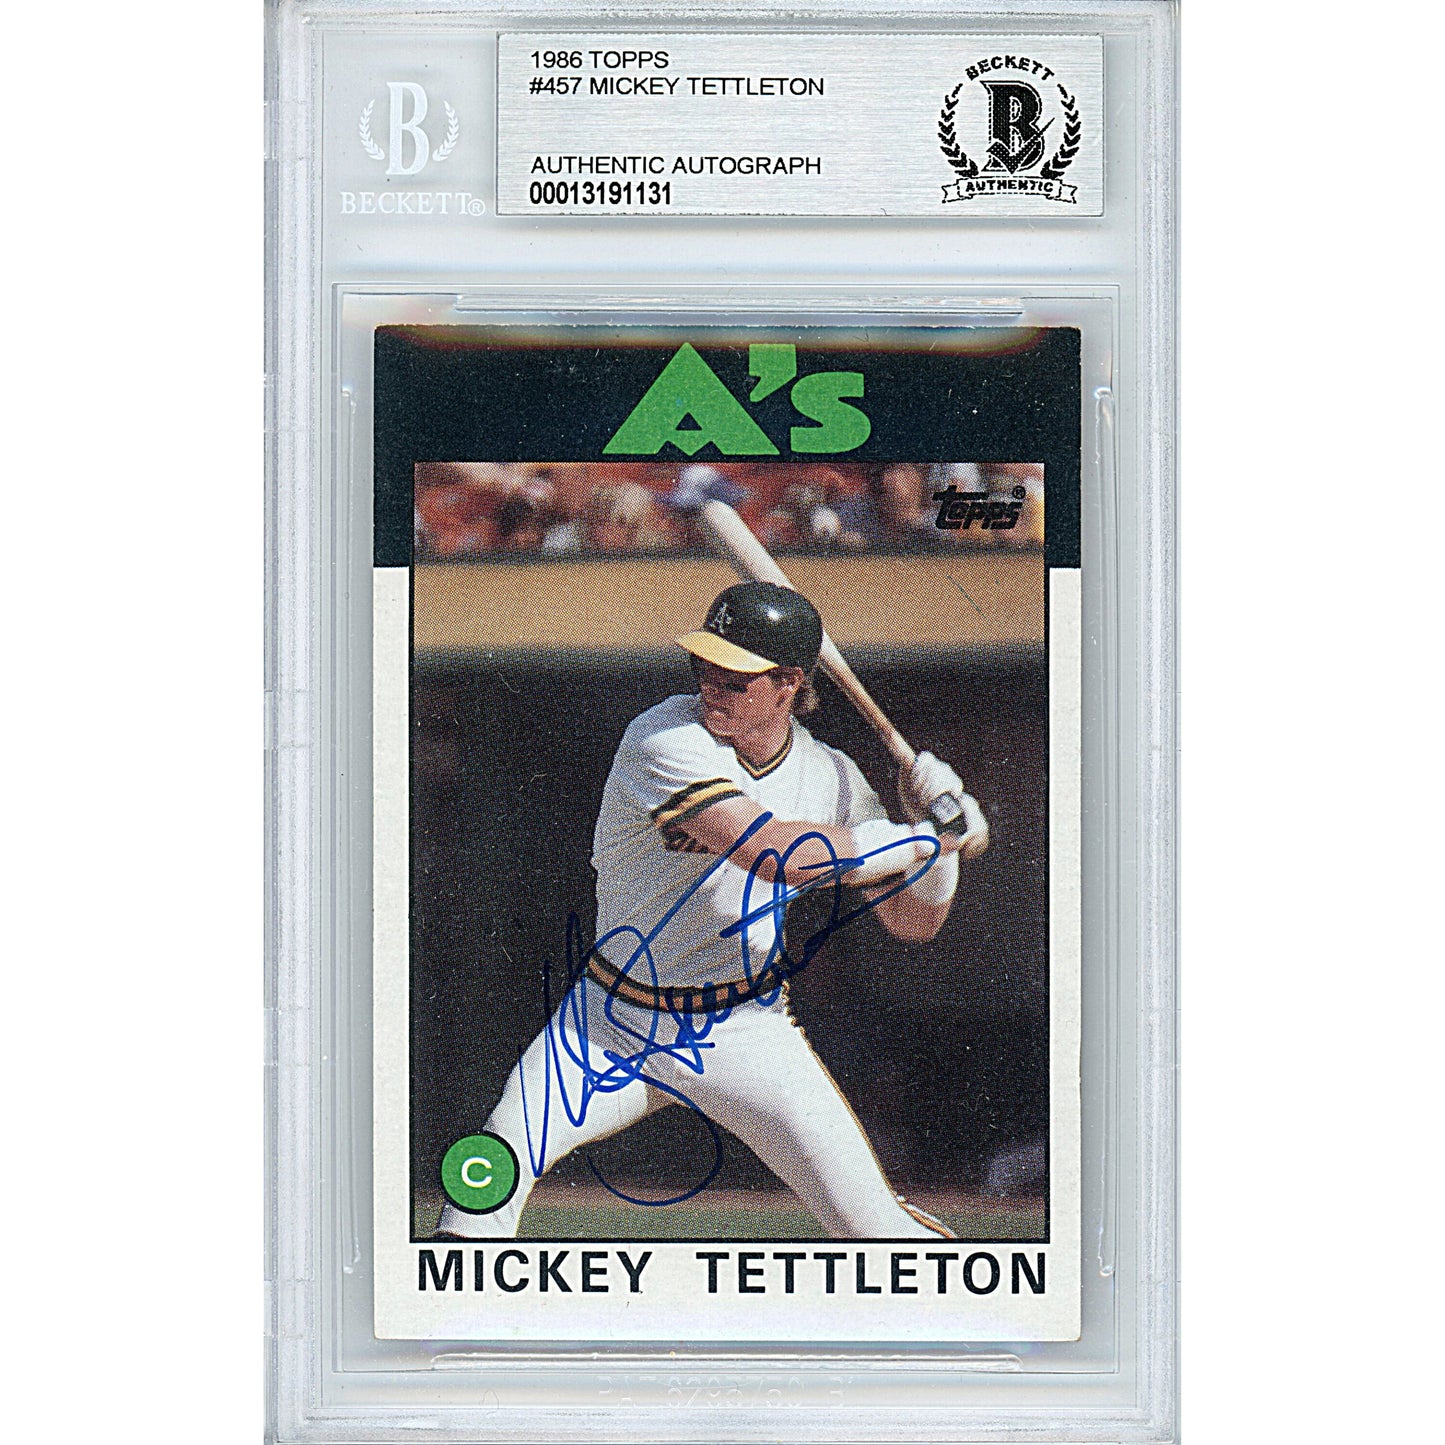 Baseballs- Autographed- Mickey Tettleton Signed Oakland Athletics A's 1986 Topps Baseball Card Beckett BAS Slabbed 00013191131 - 101